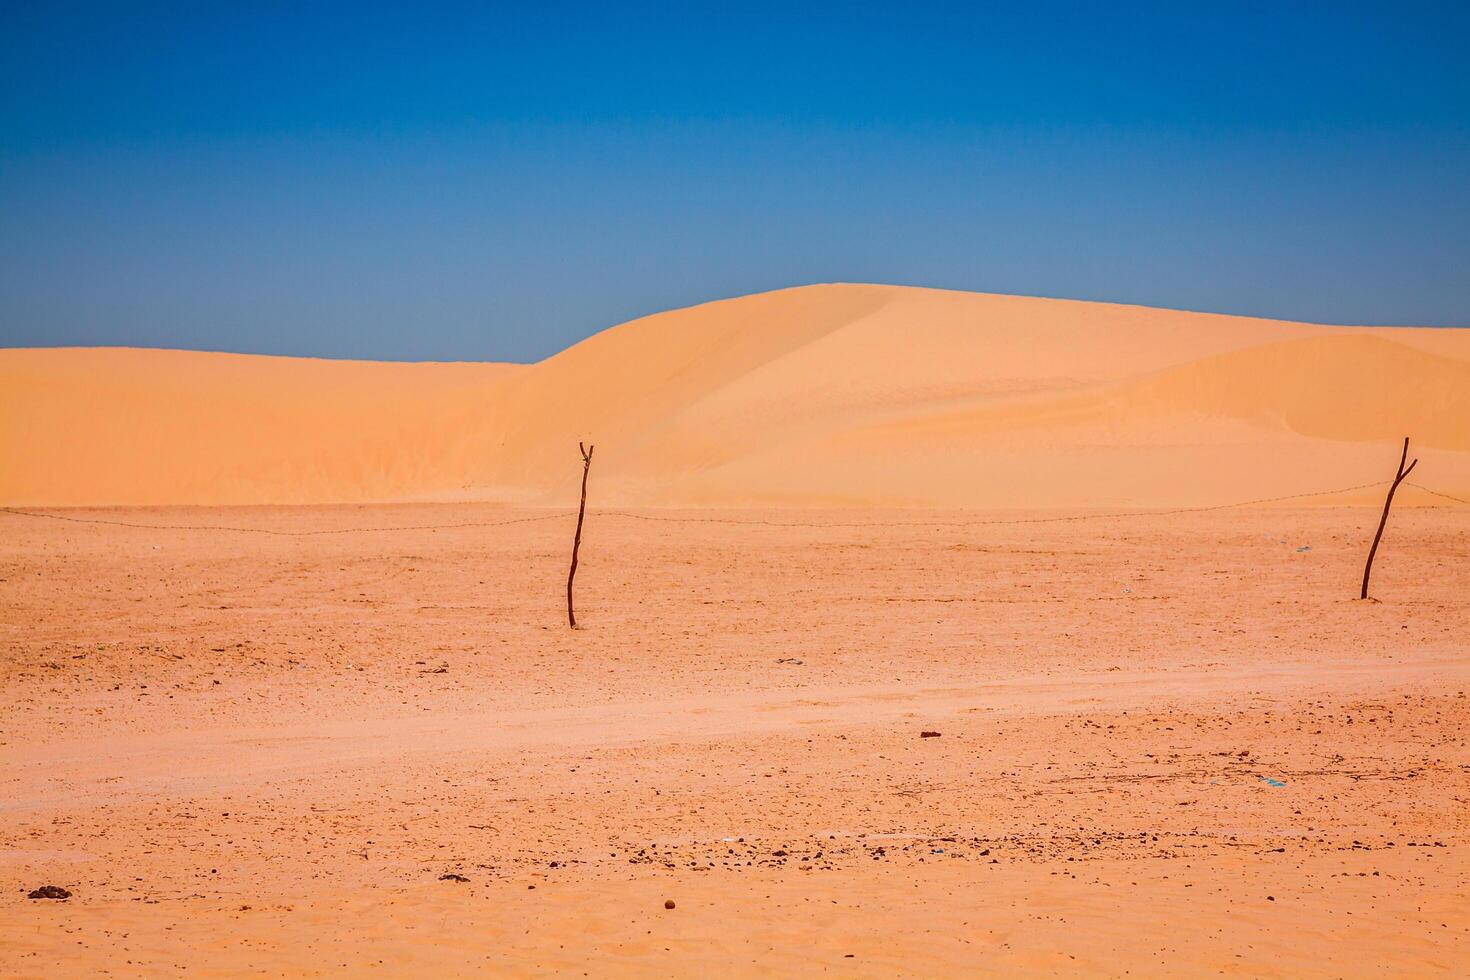 sabbia dune di sahara deserto vicino ong Jemel nel Tozeur, Tunisia. foto